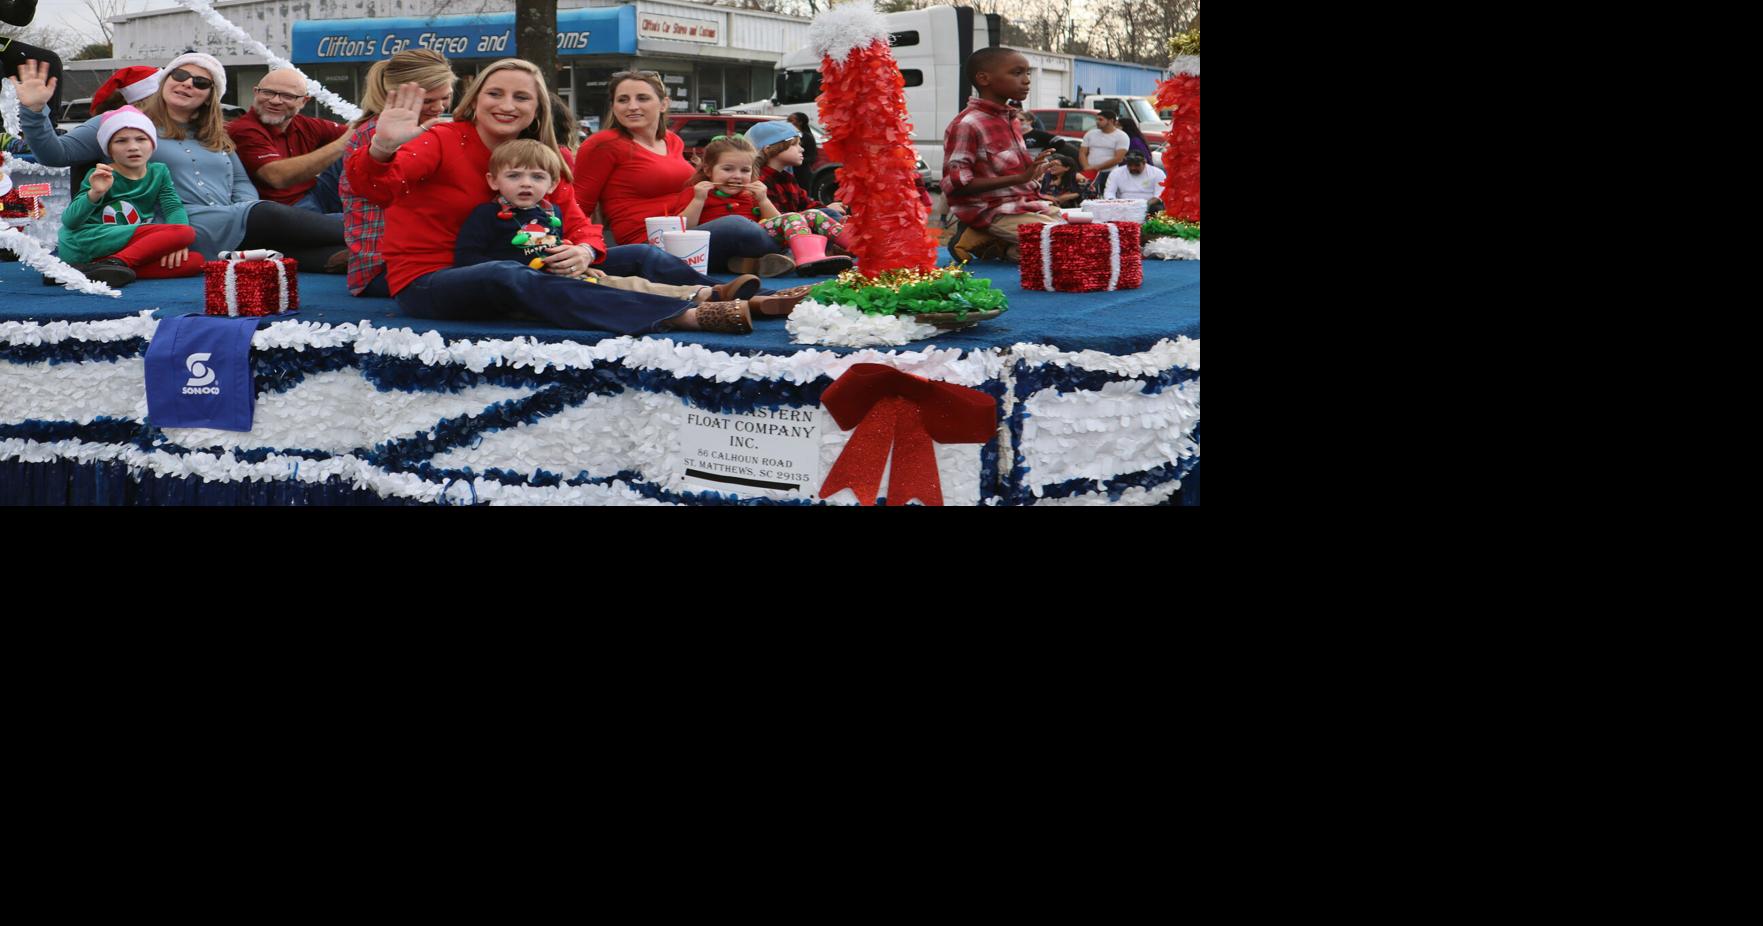 Hartsville hosts annual Christmas parade on Saturday